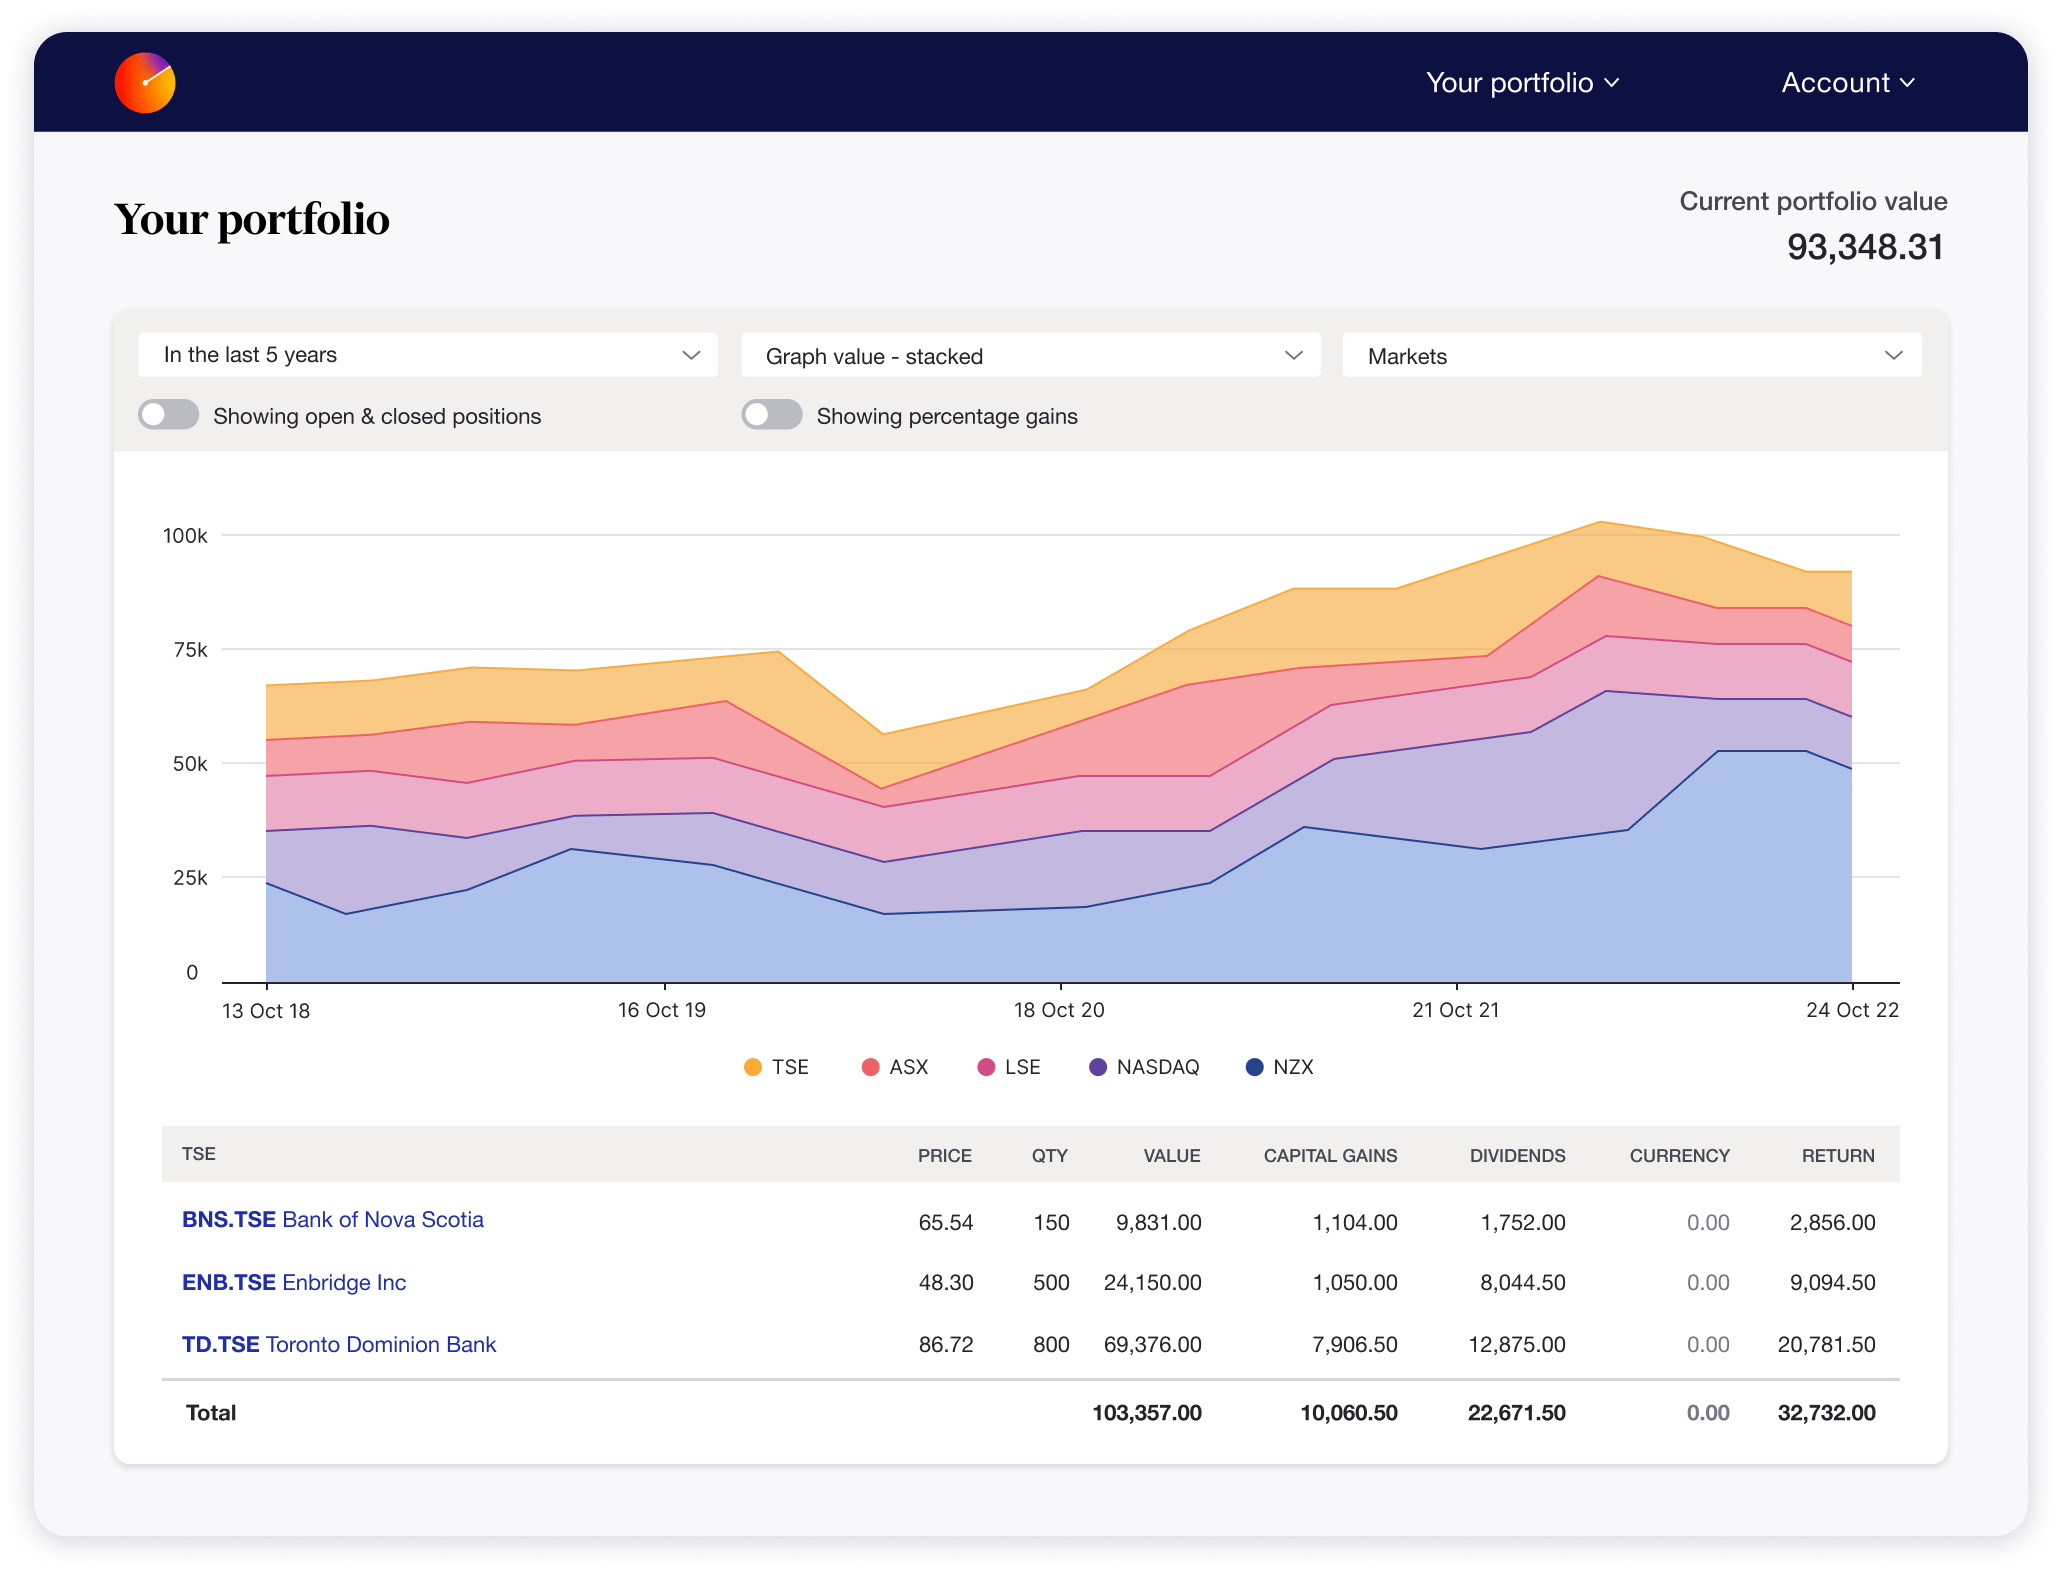 User Interface of Sharesight's portfolio management tool